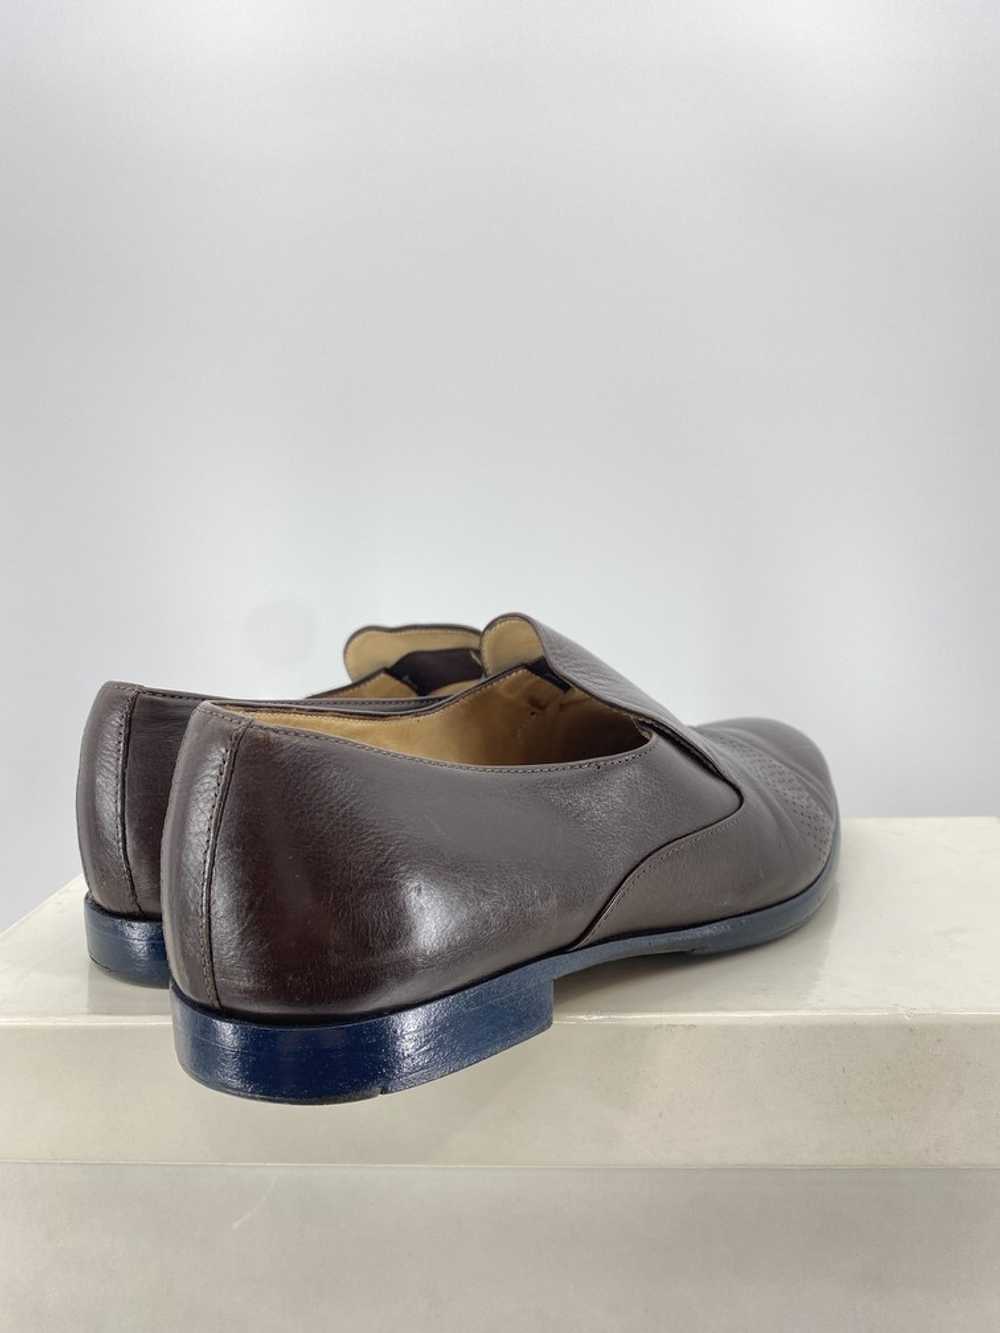 Dries Van Noten Brown Leather Loafers - image 6